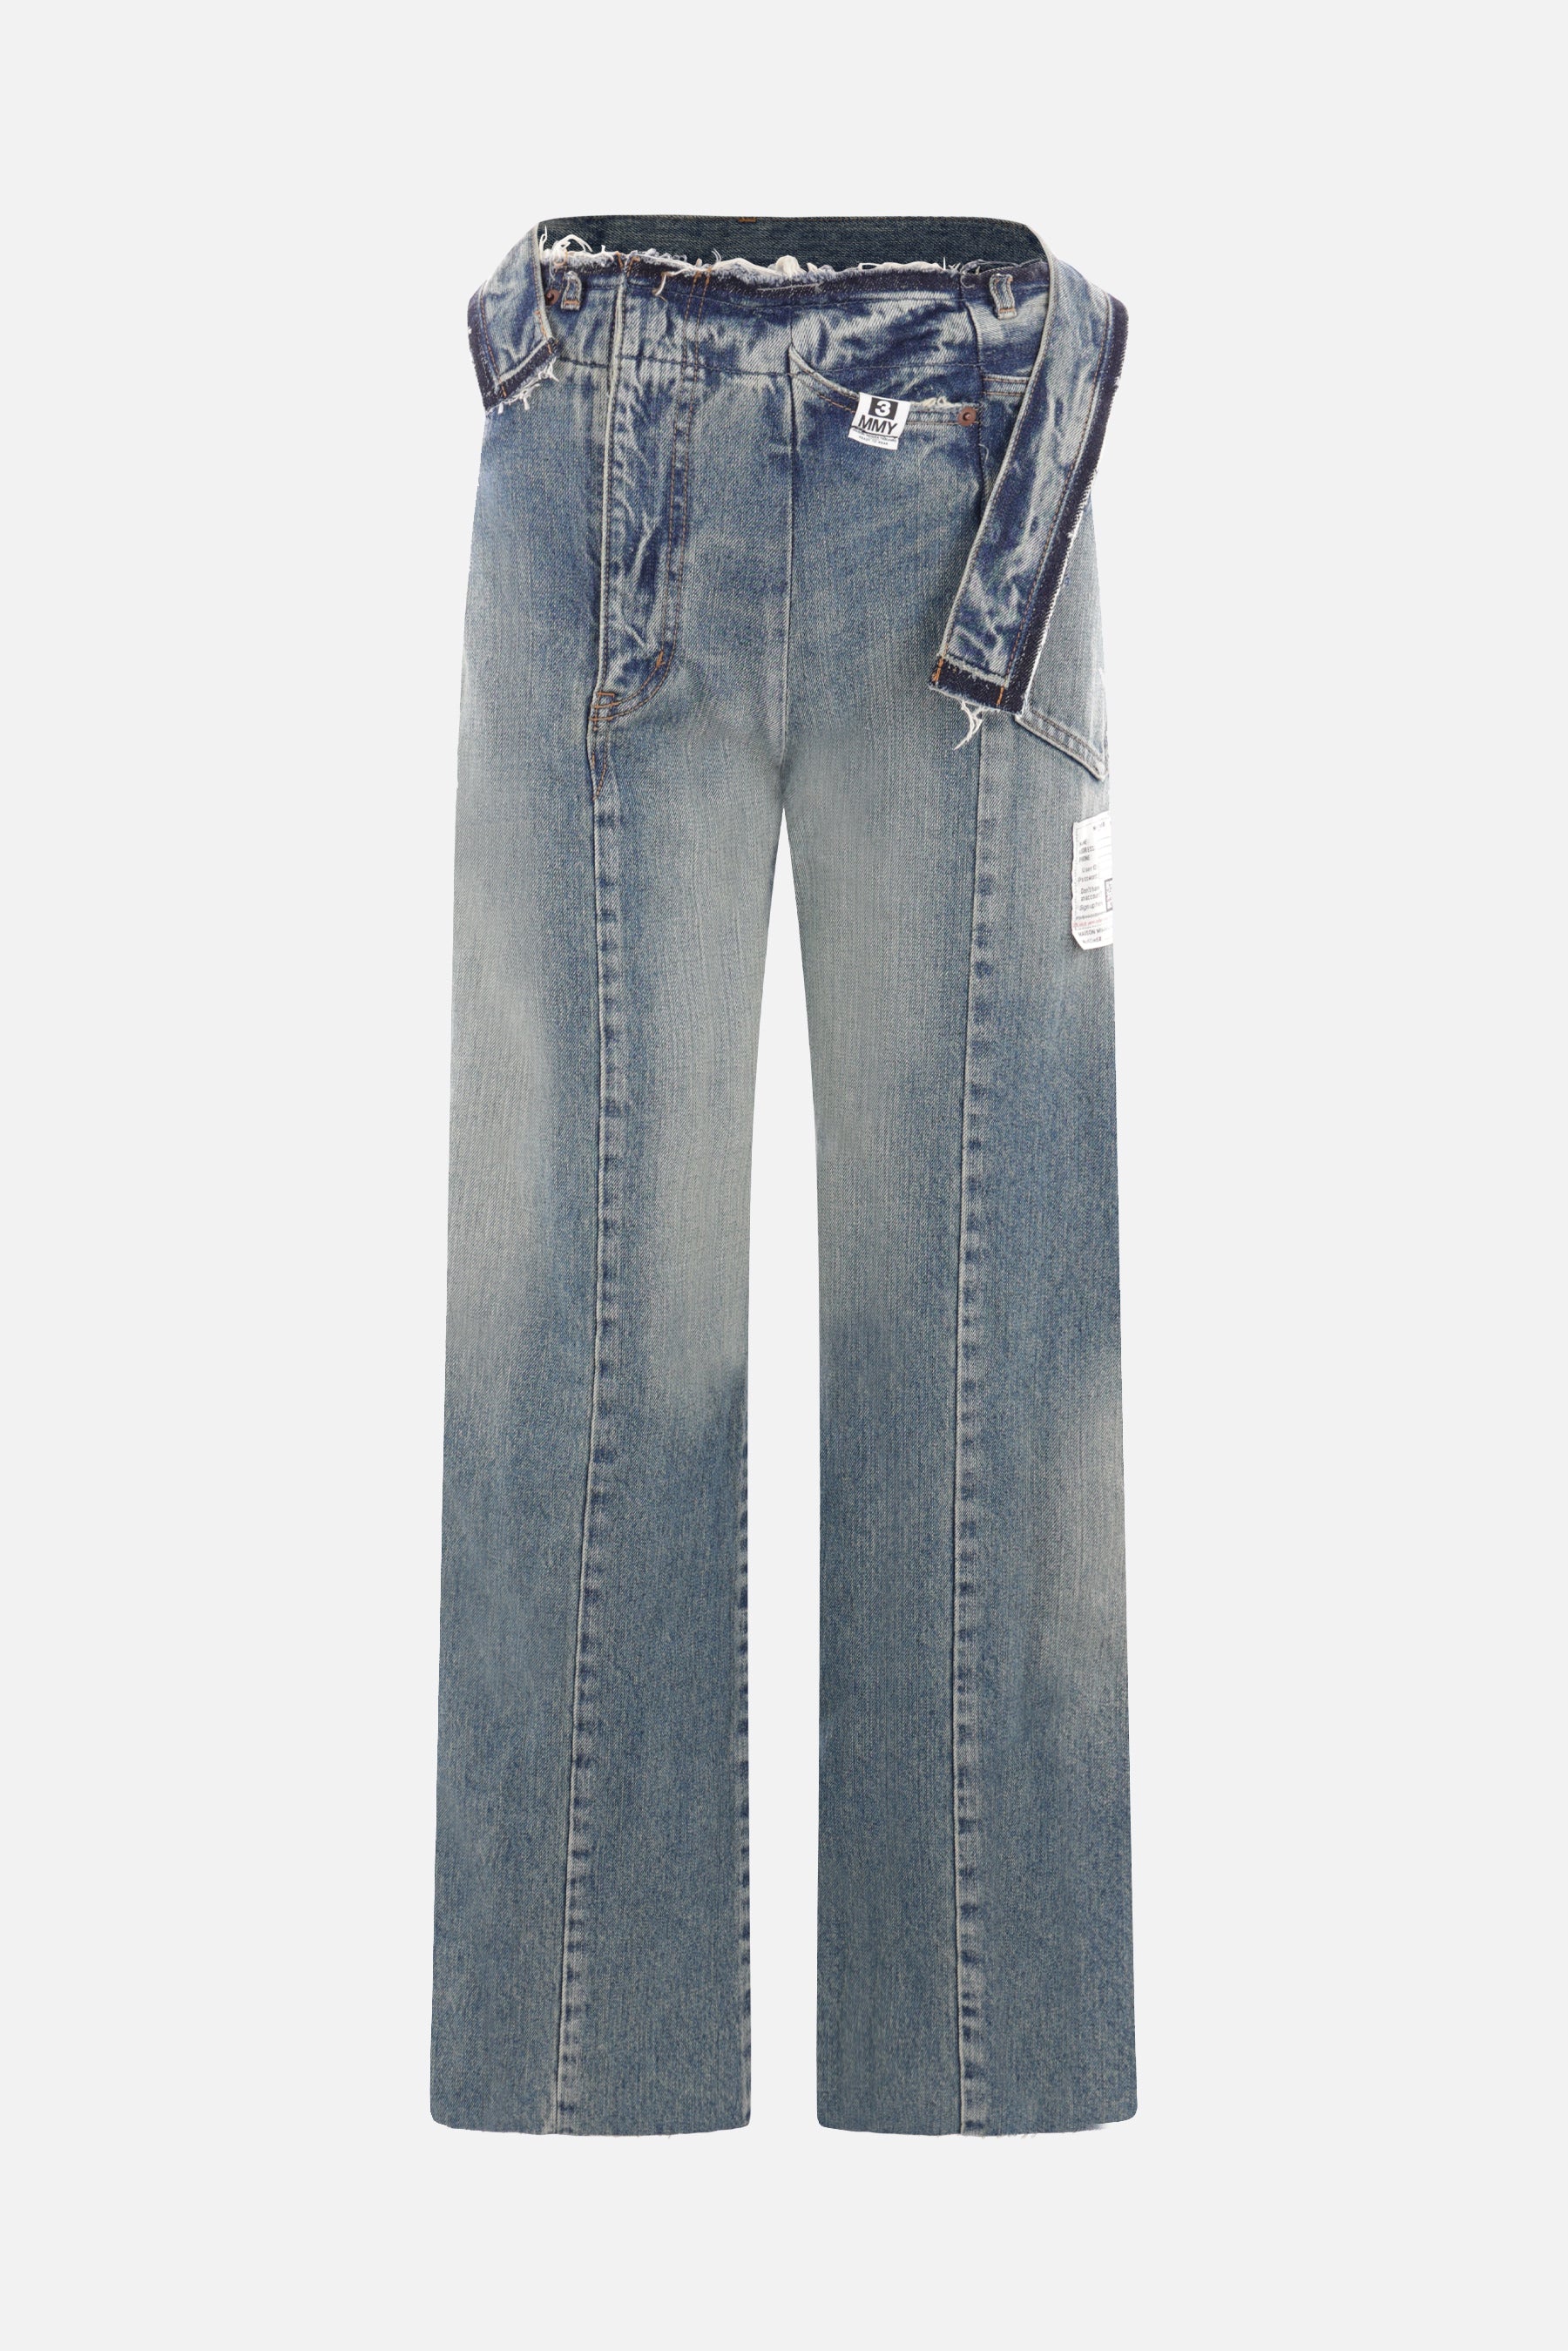 denim reconstructed jeans